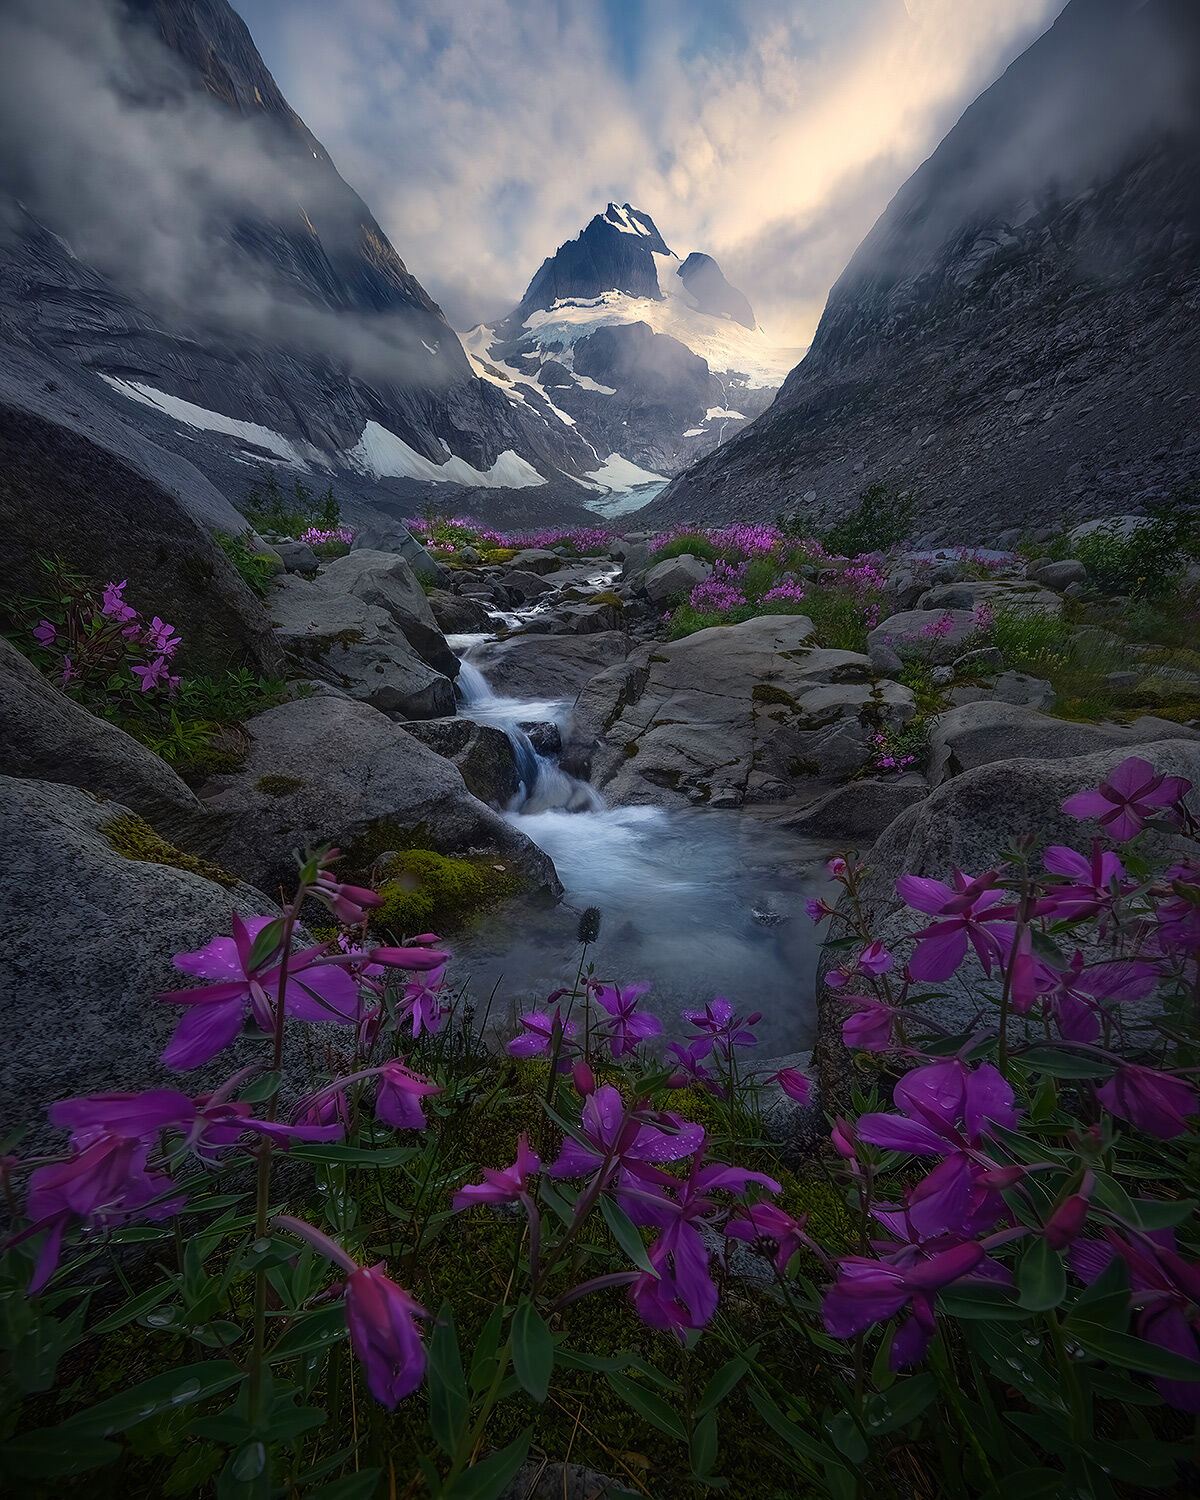 Alaska, glacier, mountains, steep, jagged, boundary range, summer, snow, wildflowers, meadow, stream